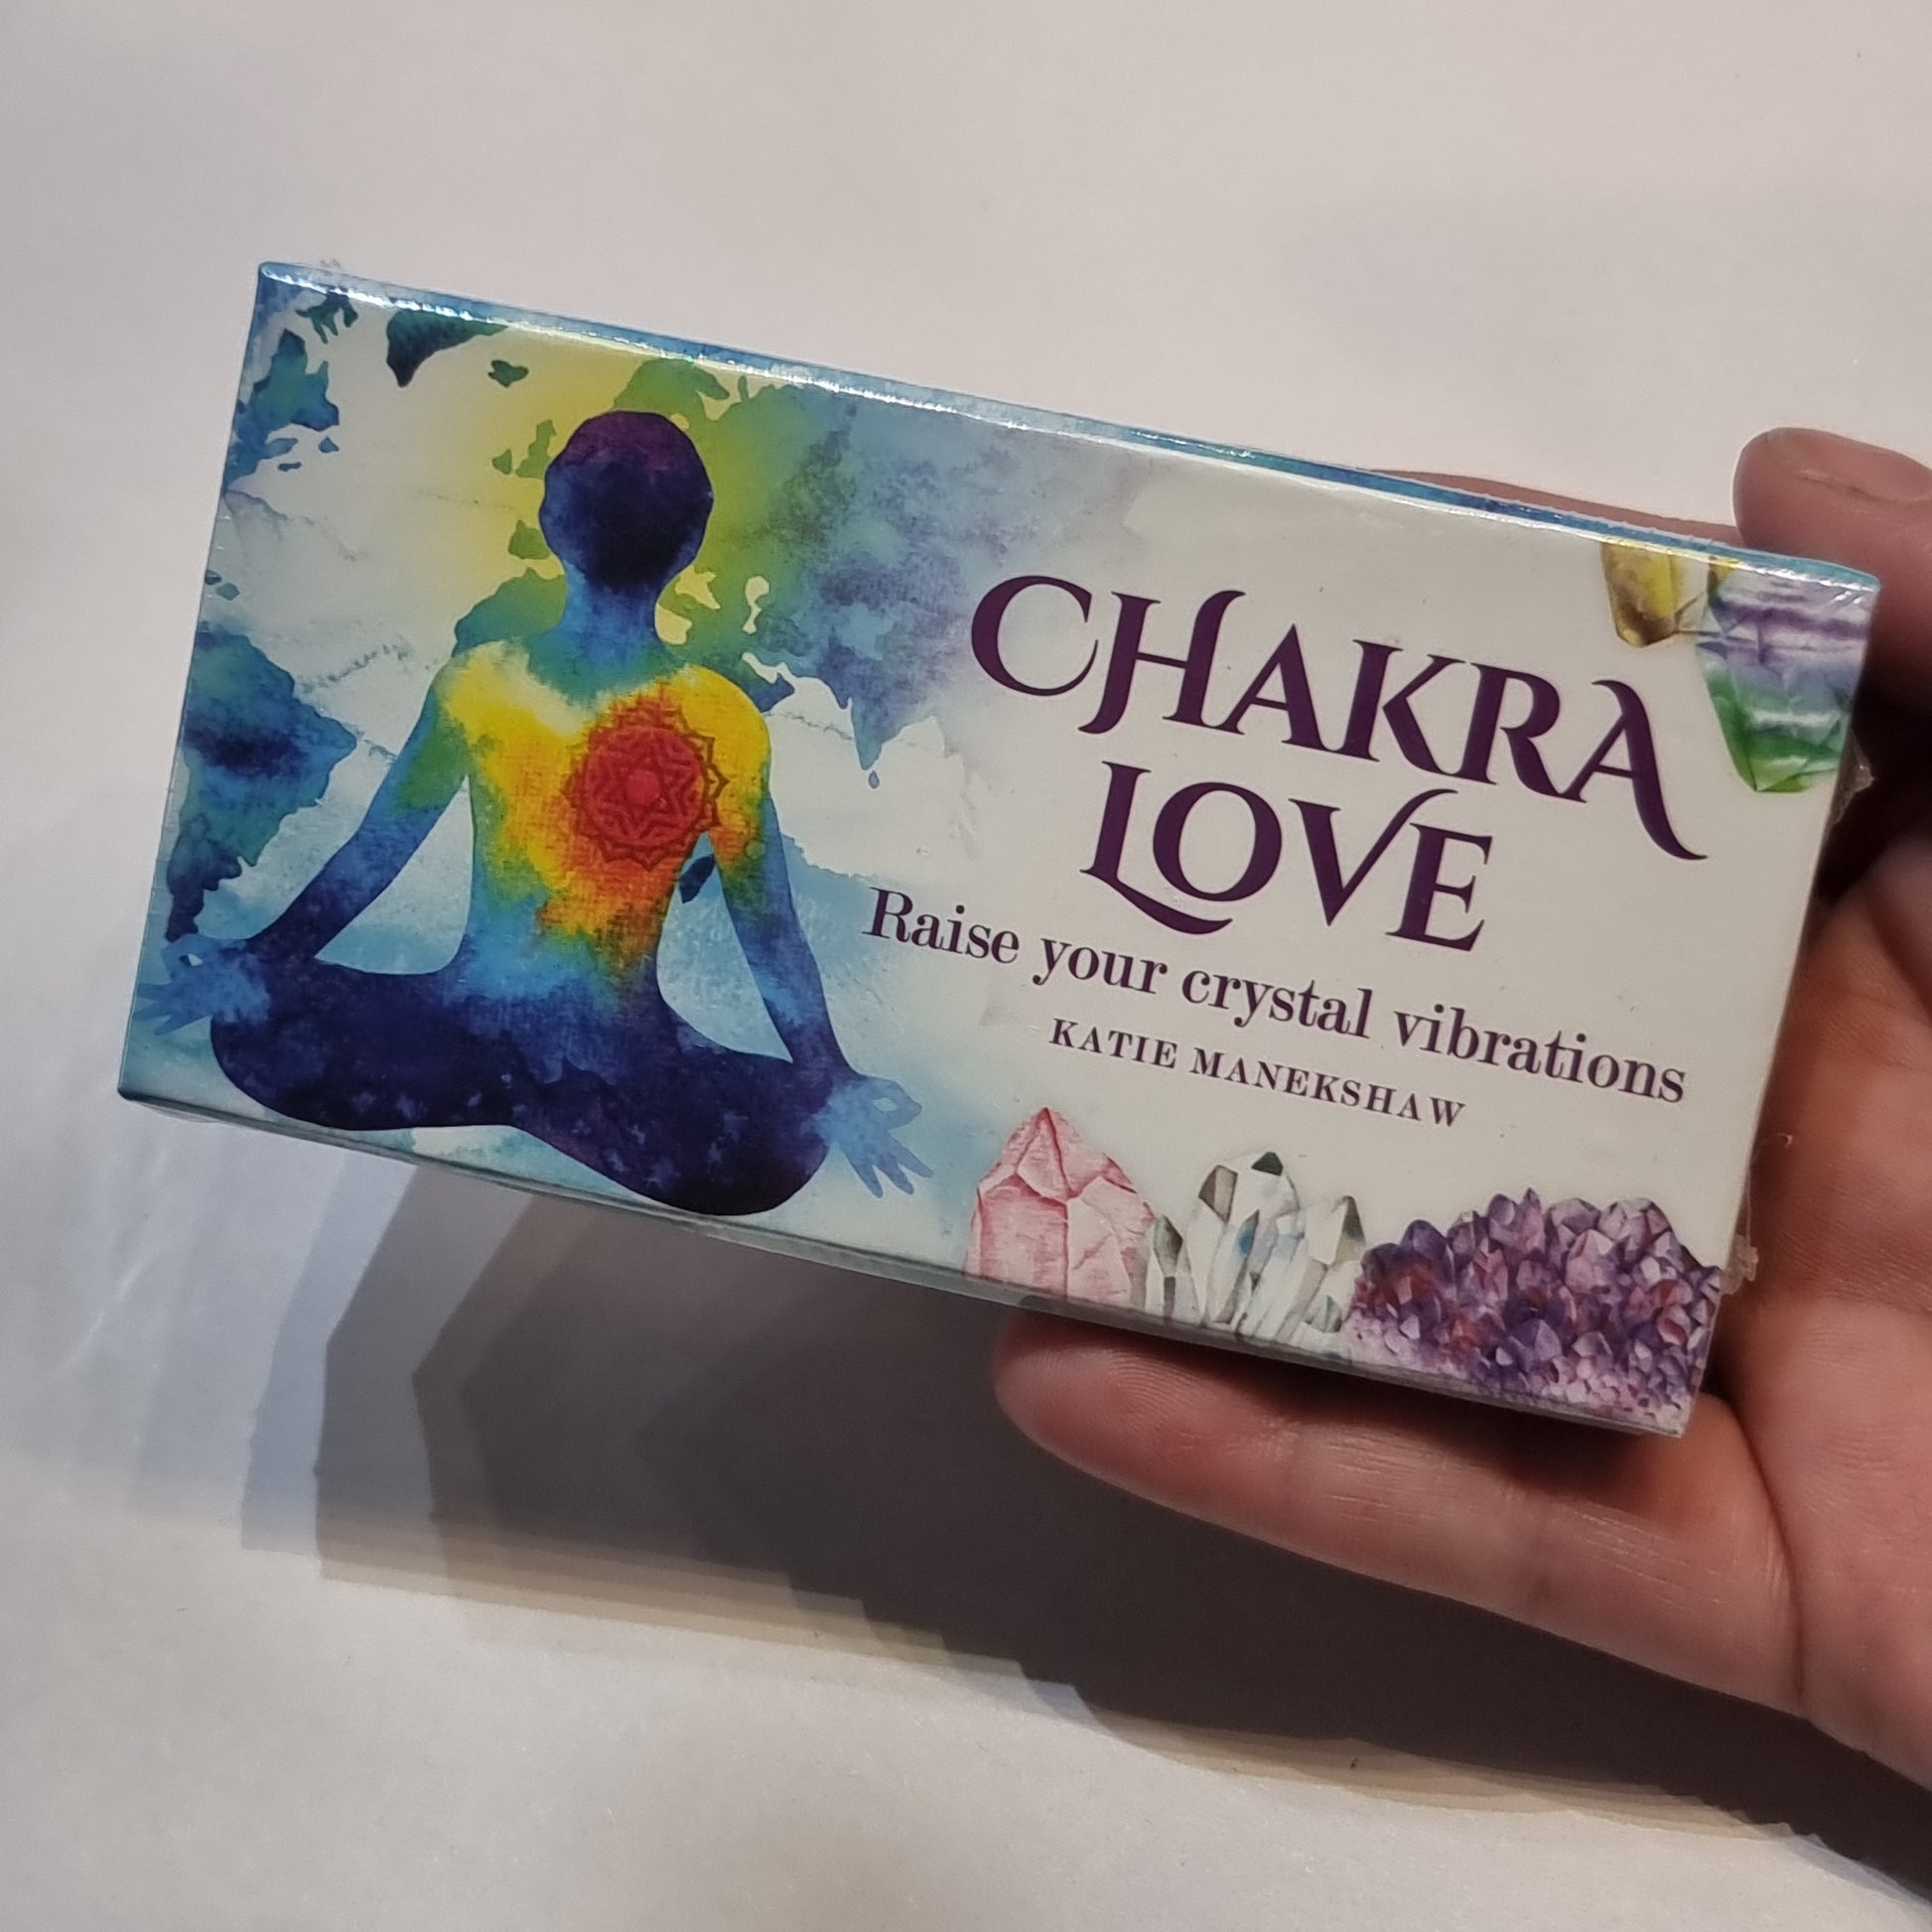 Chakra love afformation cards - Rivendell Shop